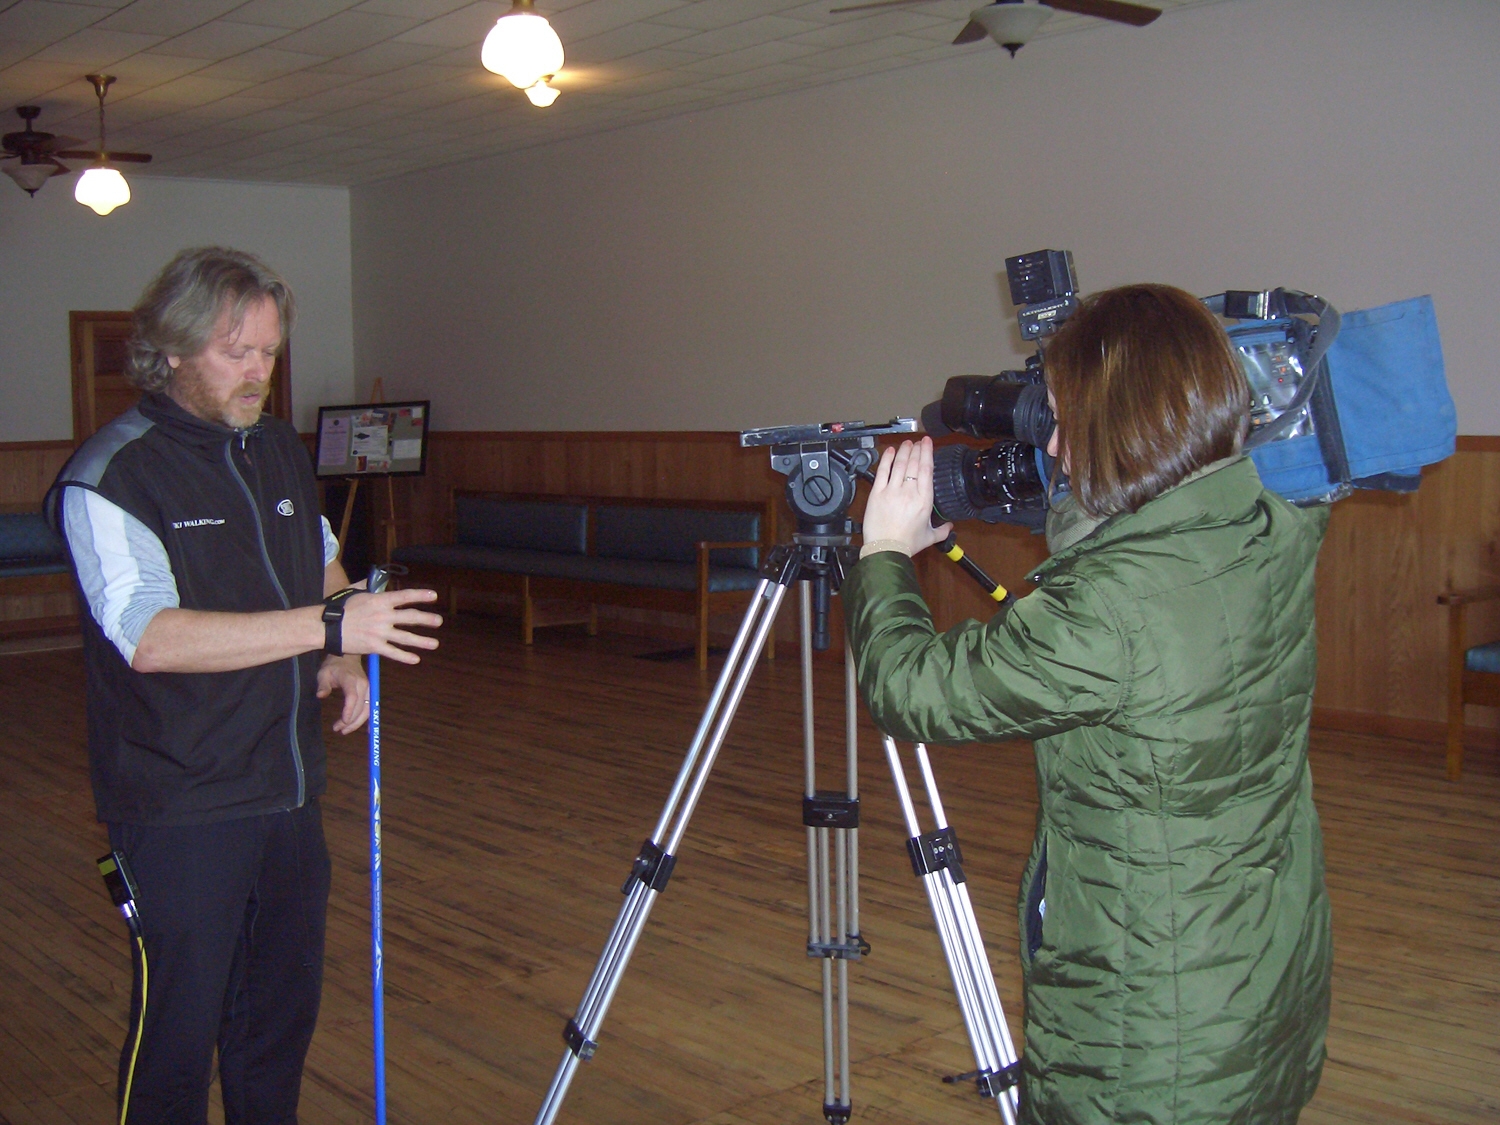 Nordic Walking TV Interview At Pilates Studio Image